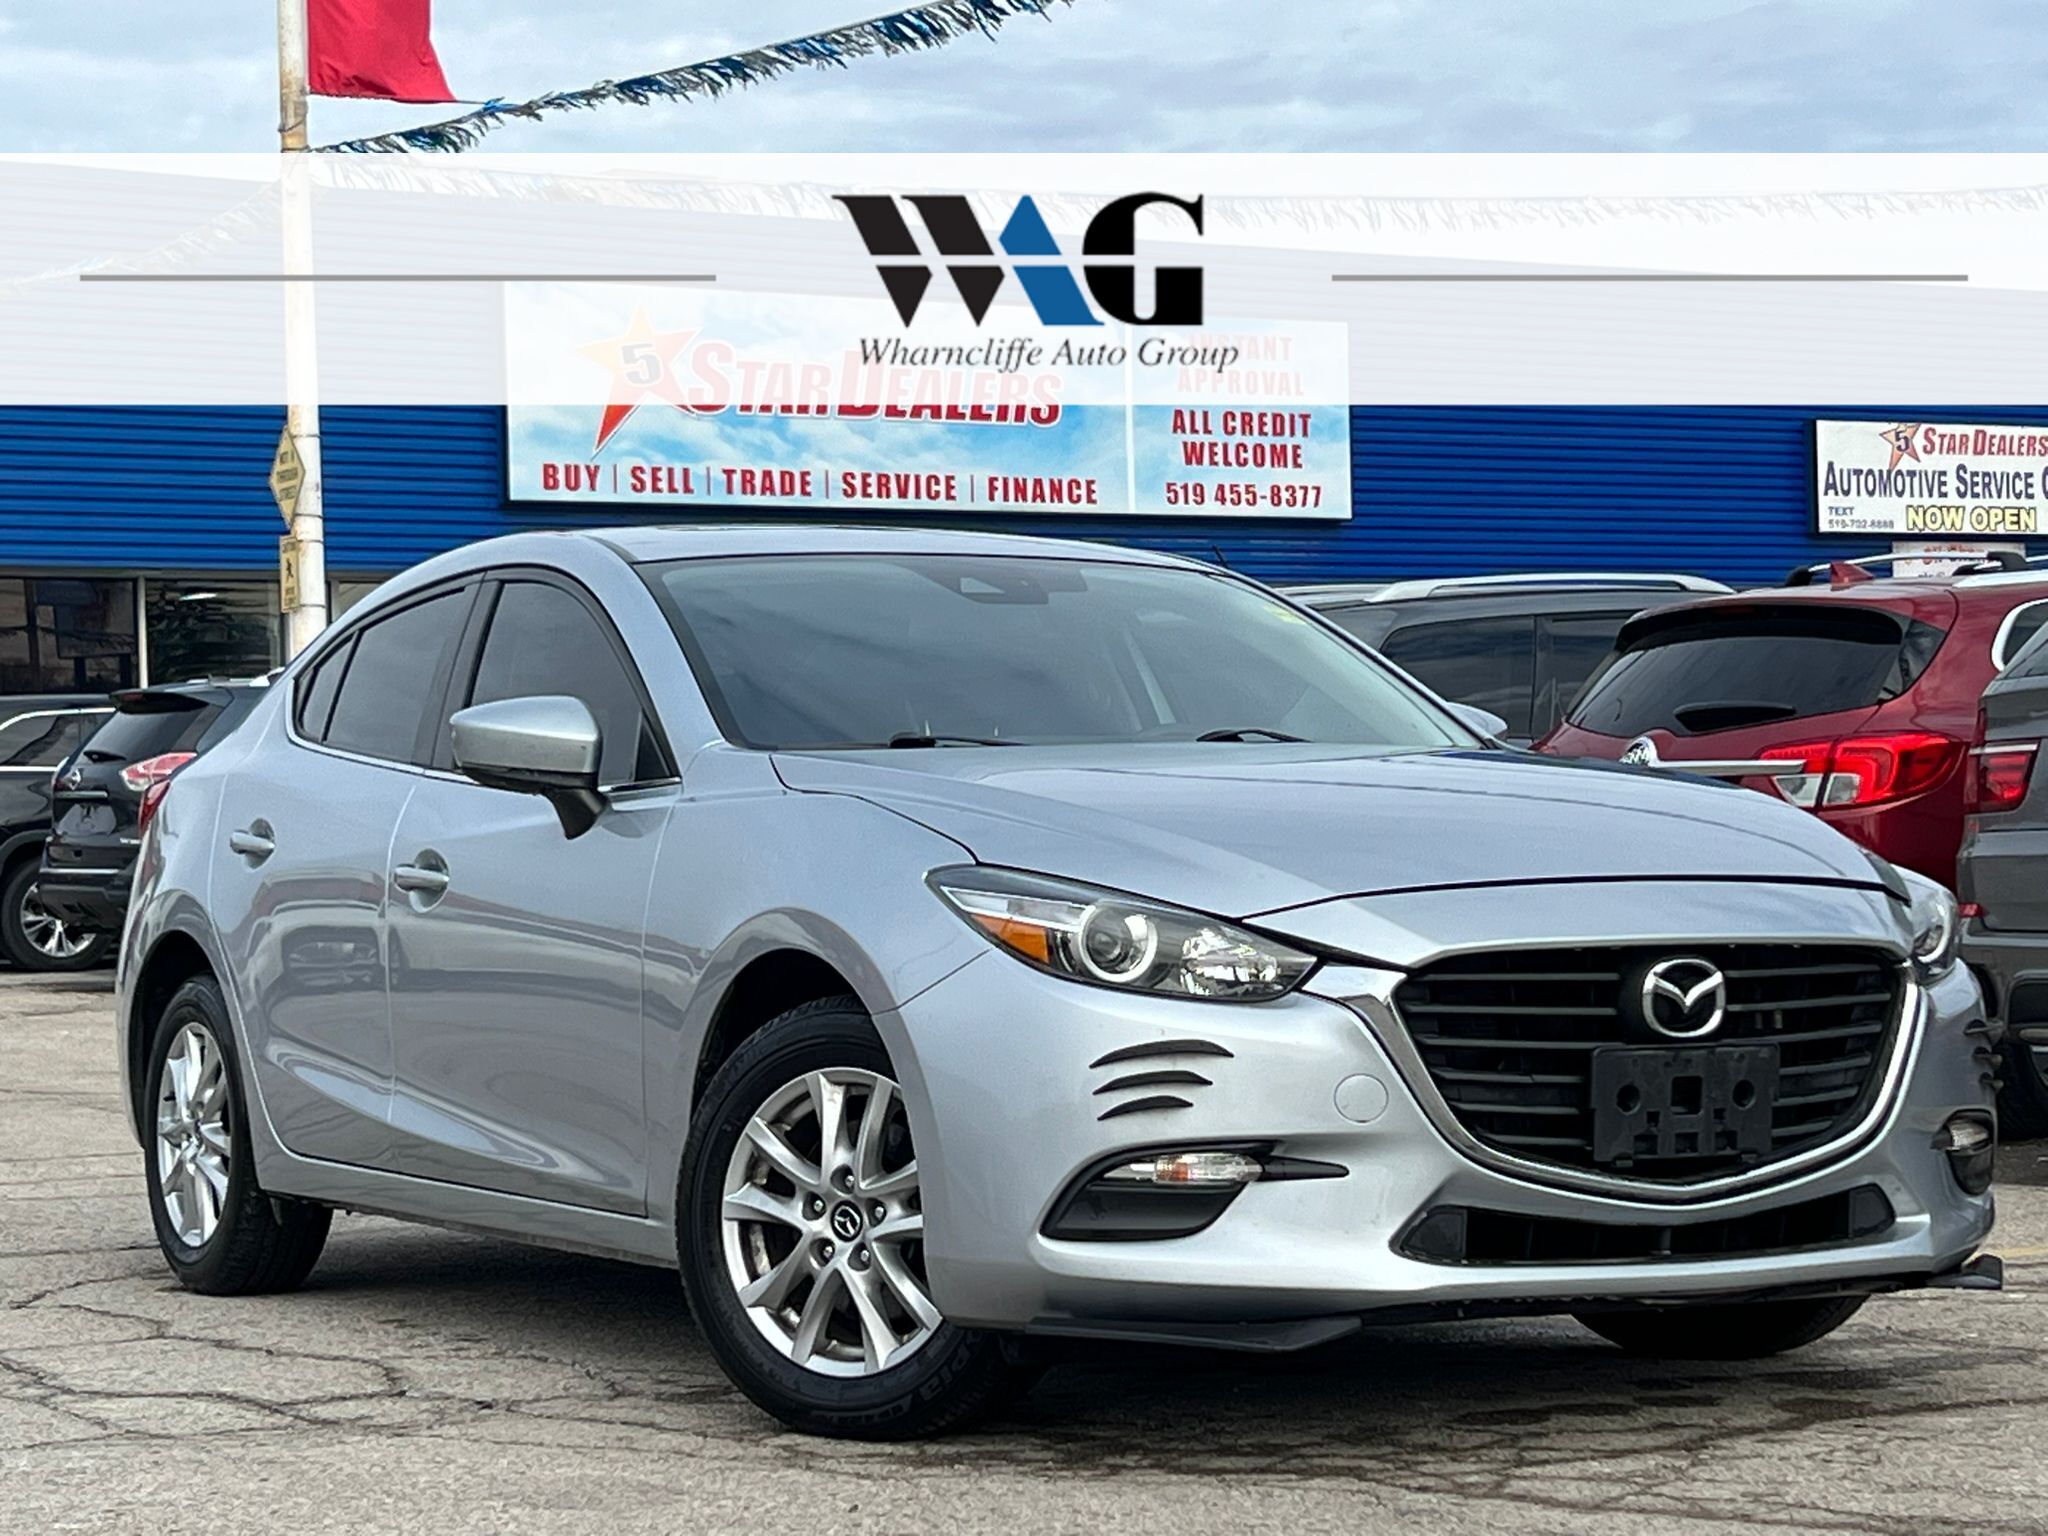 2018 Mazda Mazda3 GS Manual we finance all credit over 700 vehicles